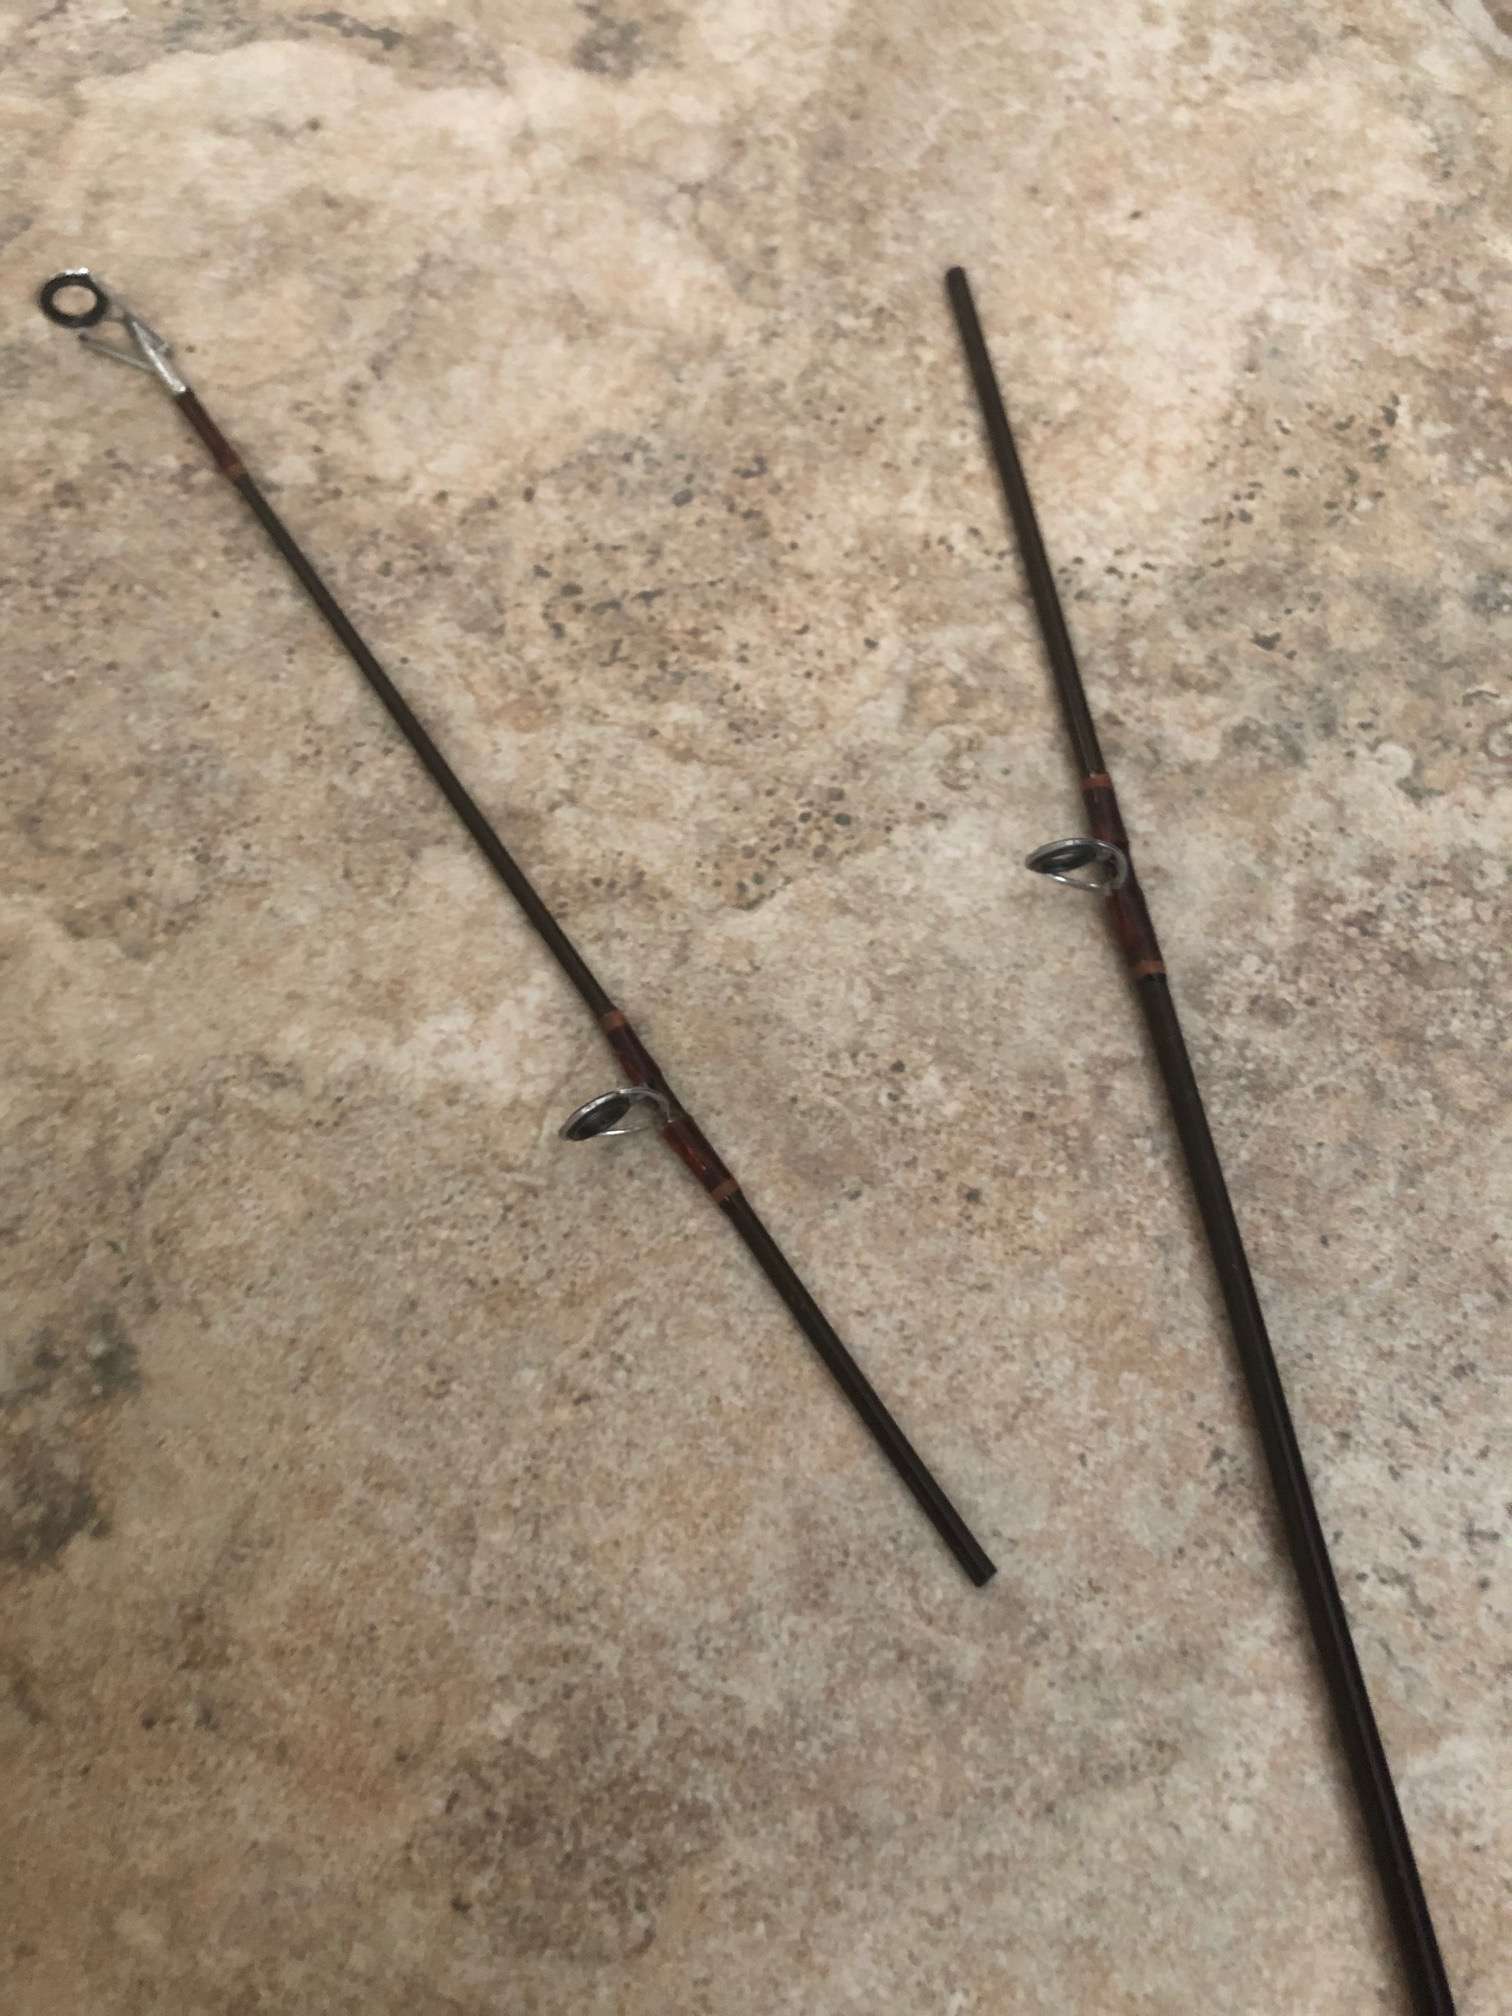 Repairing broken rod? - Fishing Rods, Reels, Line, and Knots